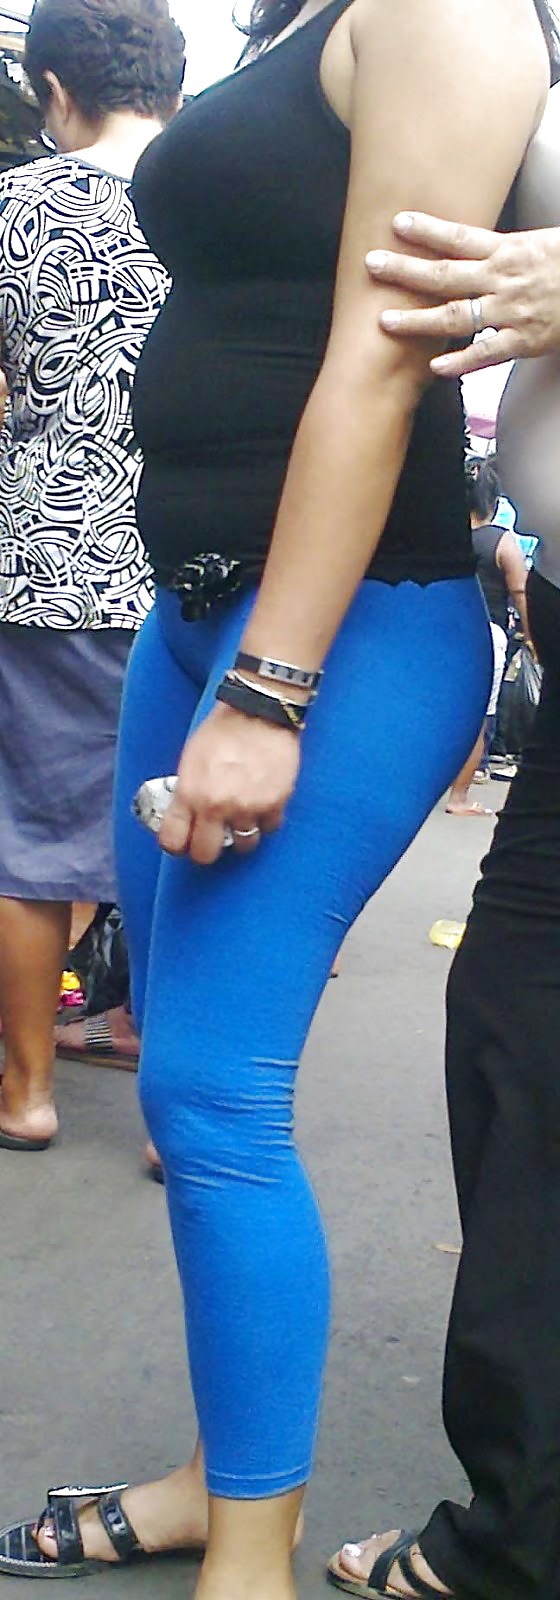 Femme En Pantalon Gros Cul Et Vpl Bleu #19818167